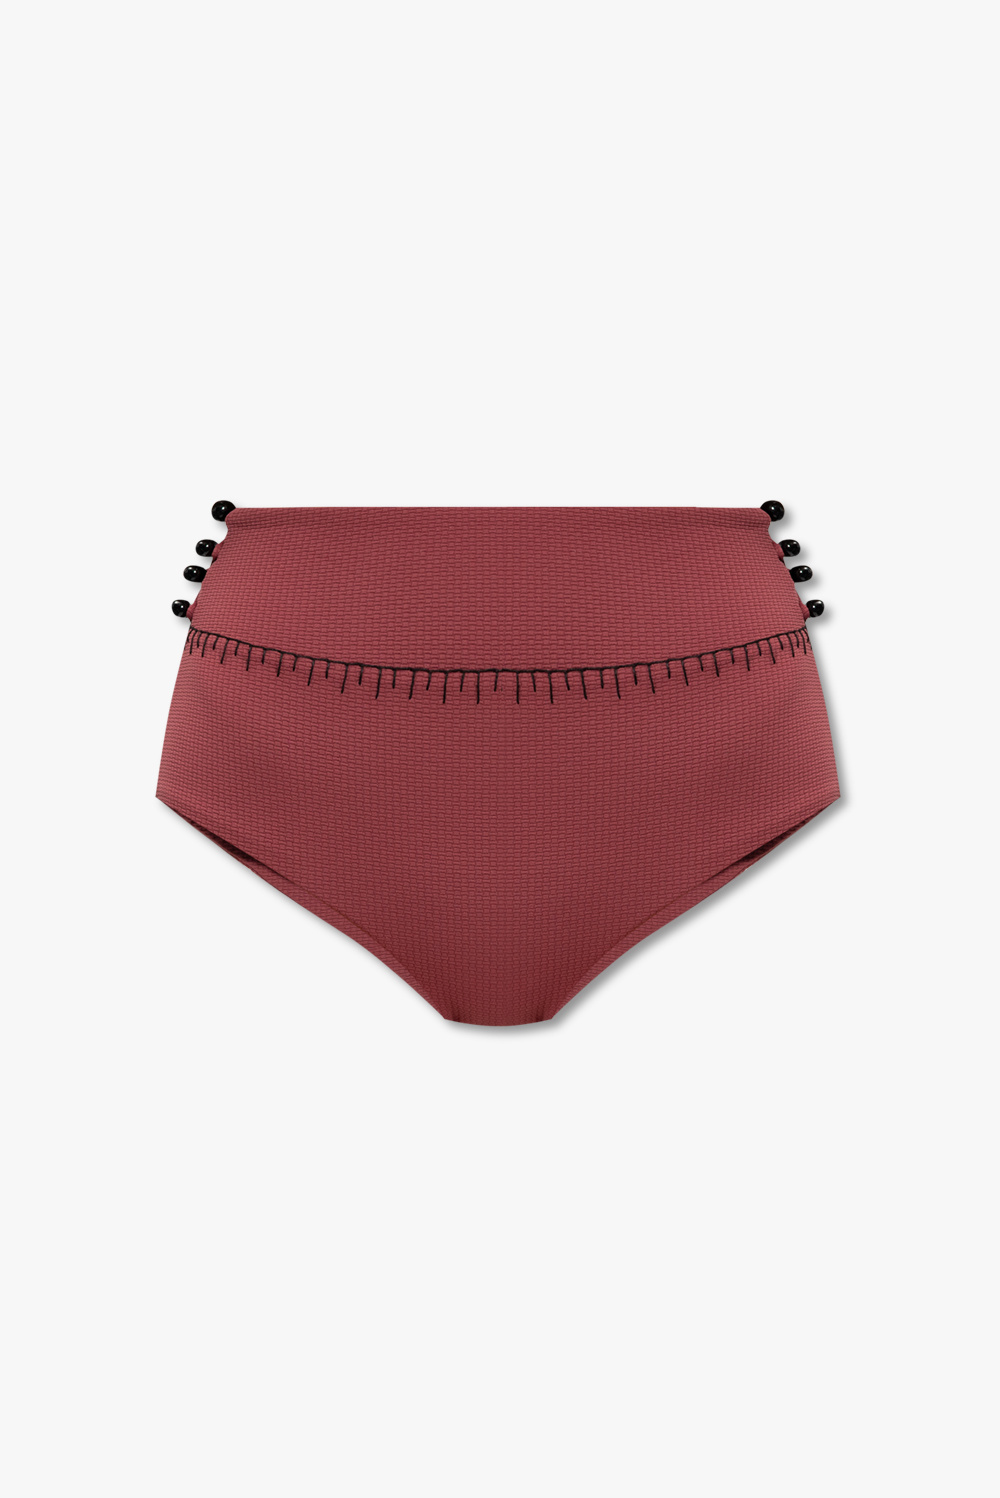 Marysia ‘Salento’ swimsuit bottom